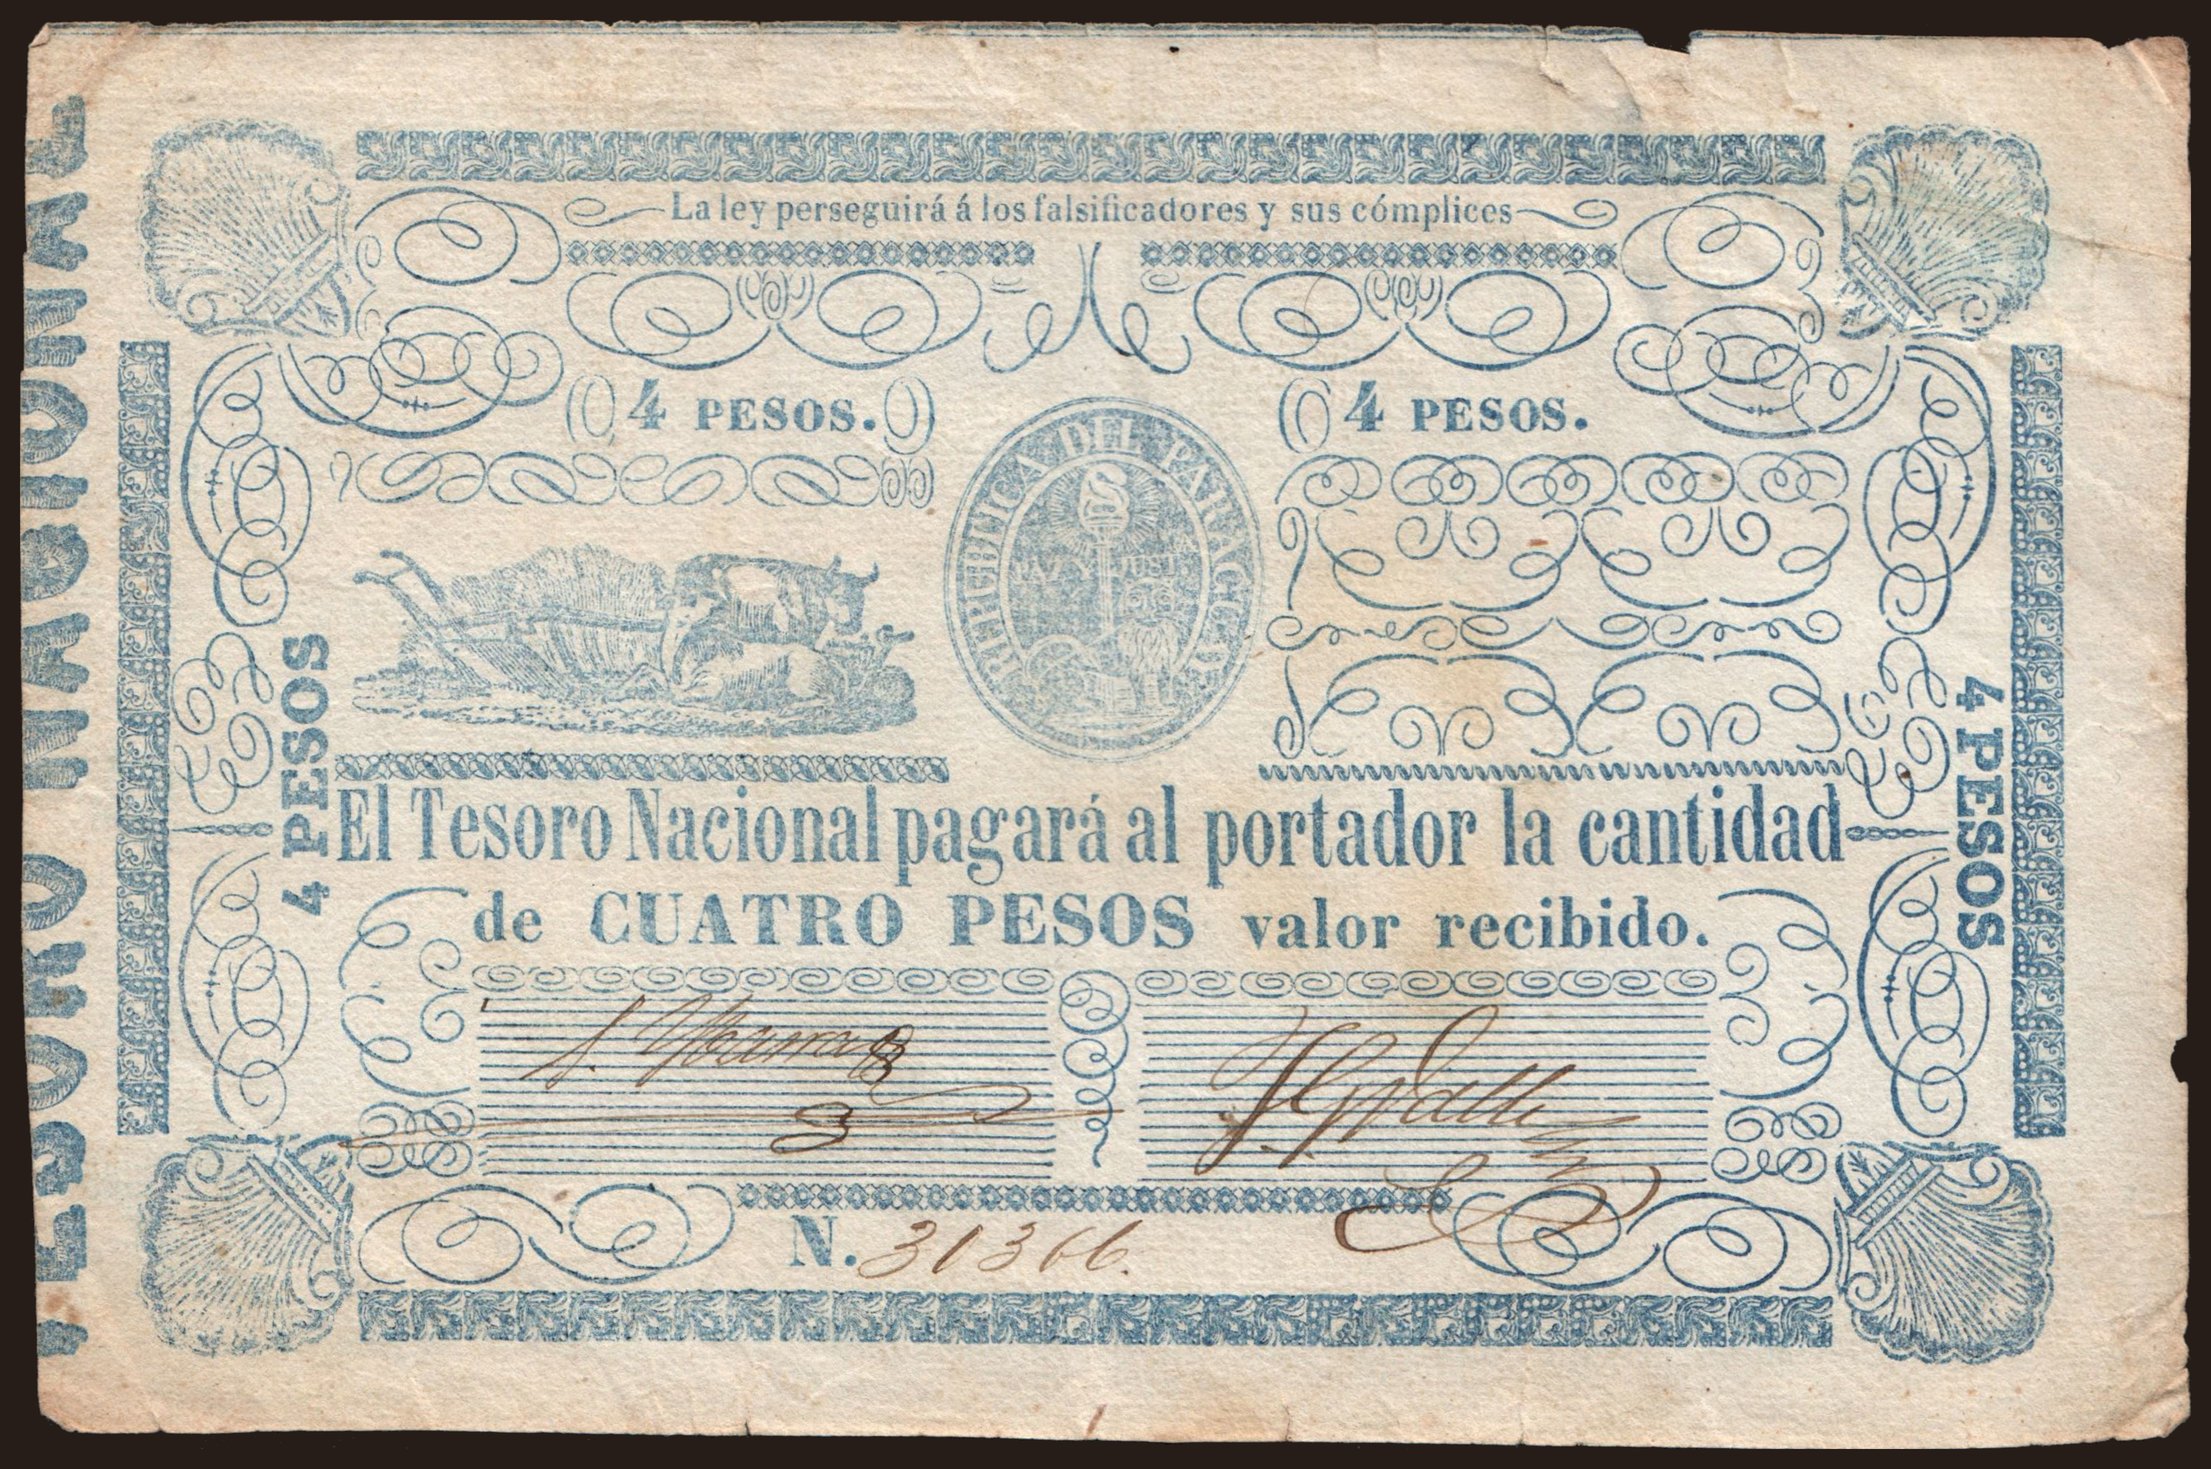 4 pesos, 1865